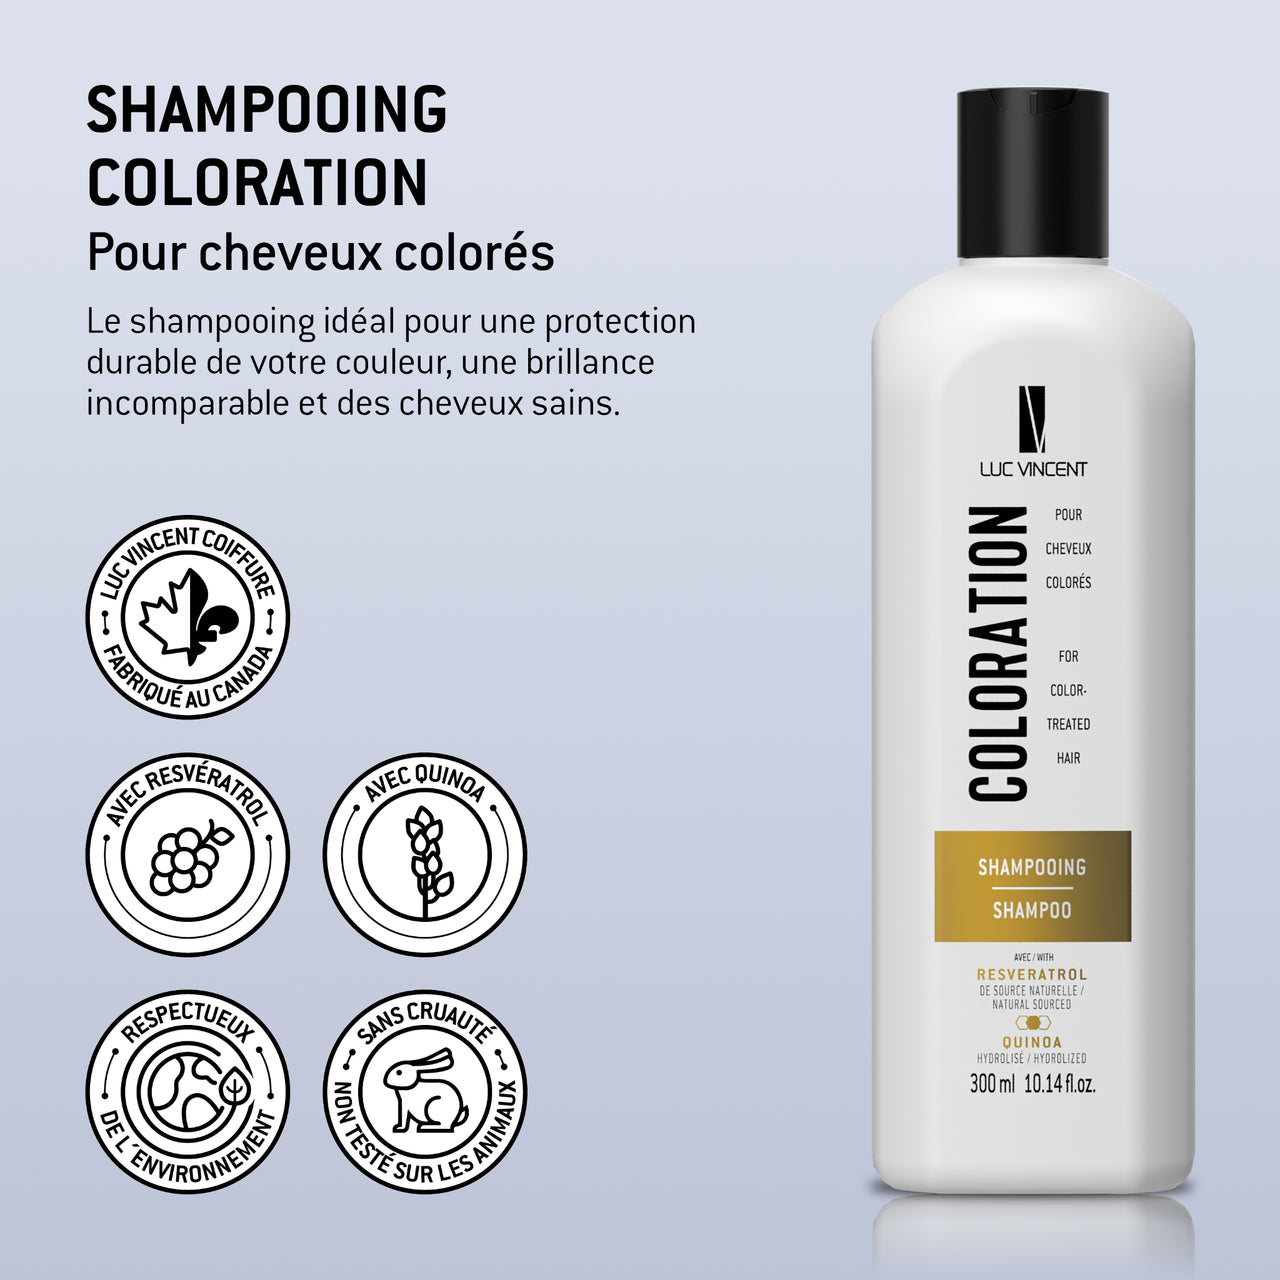 Shampooing coloration - Luc Vincent